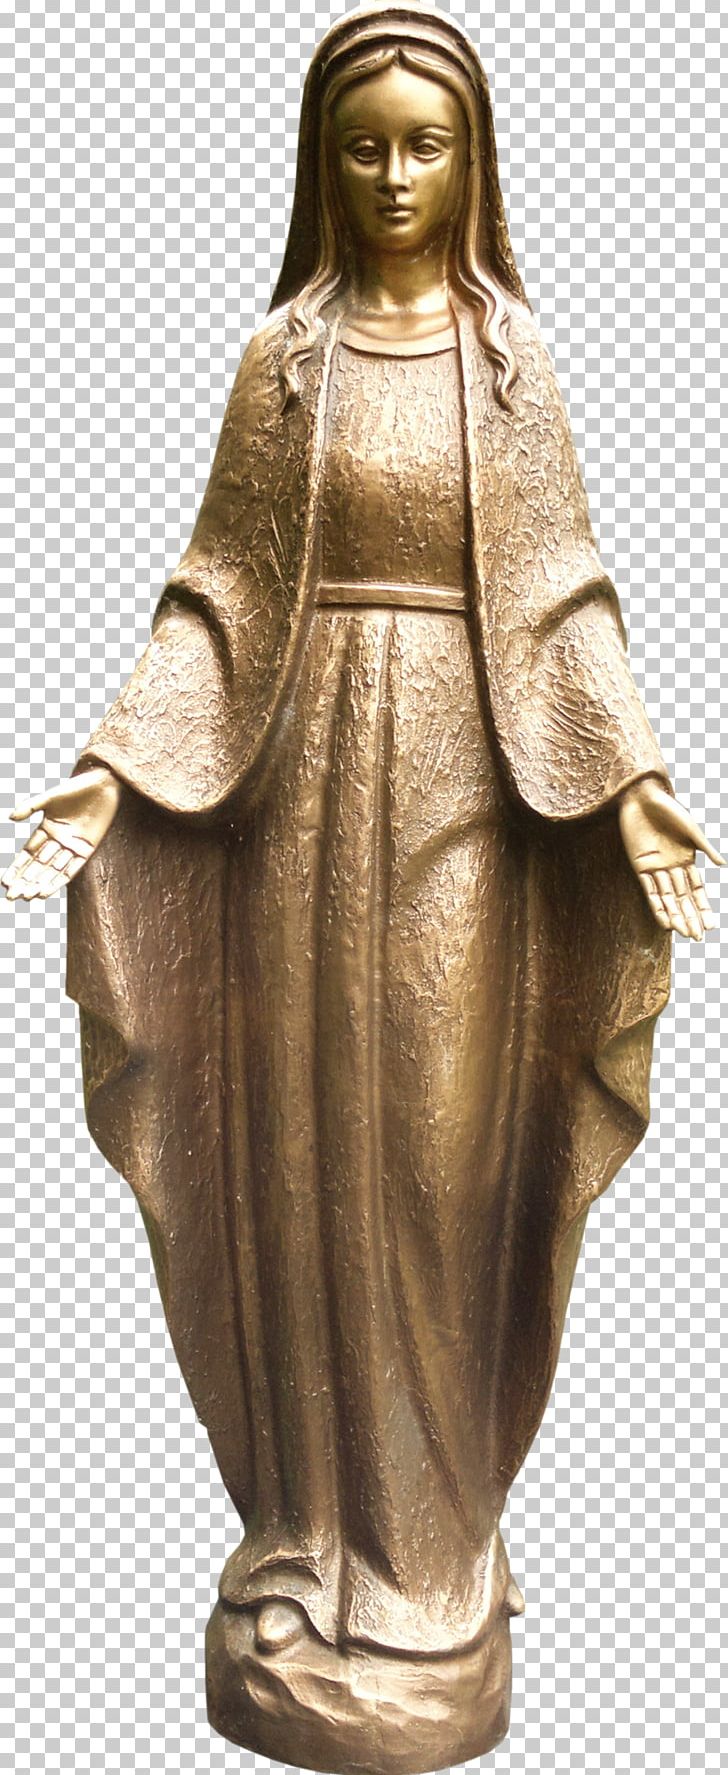 Statue Middle Ages Bronze Sculpture Classical Sculpture Figurine PNG, Clipart, Artifact, Bronze, Bronze Sculpture, Classical Sculpture, Classicism Free PNG Download